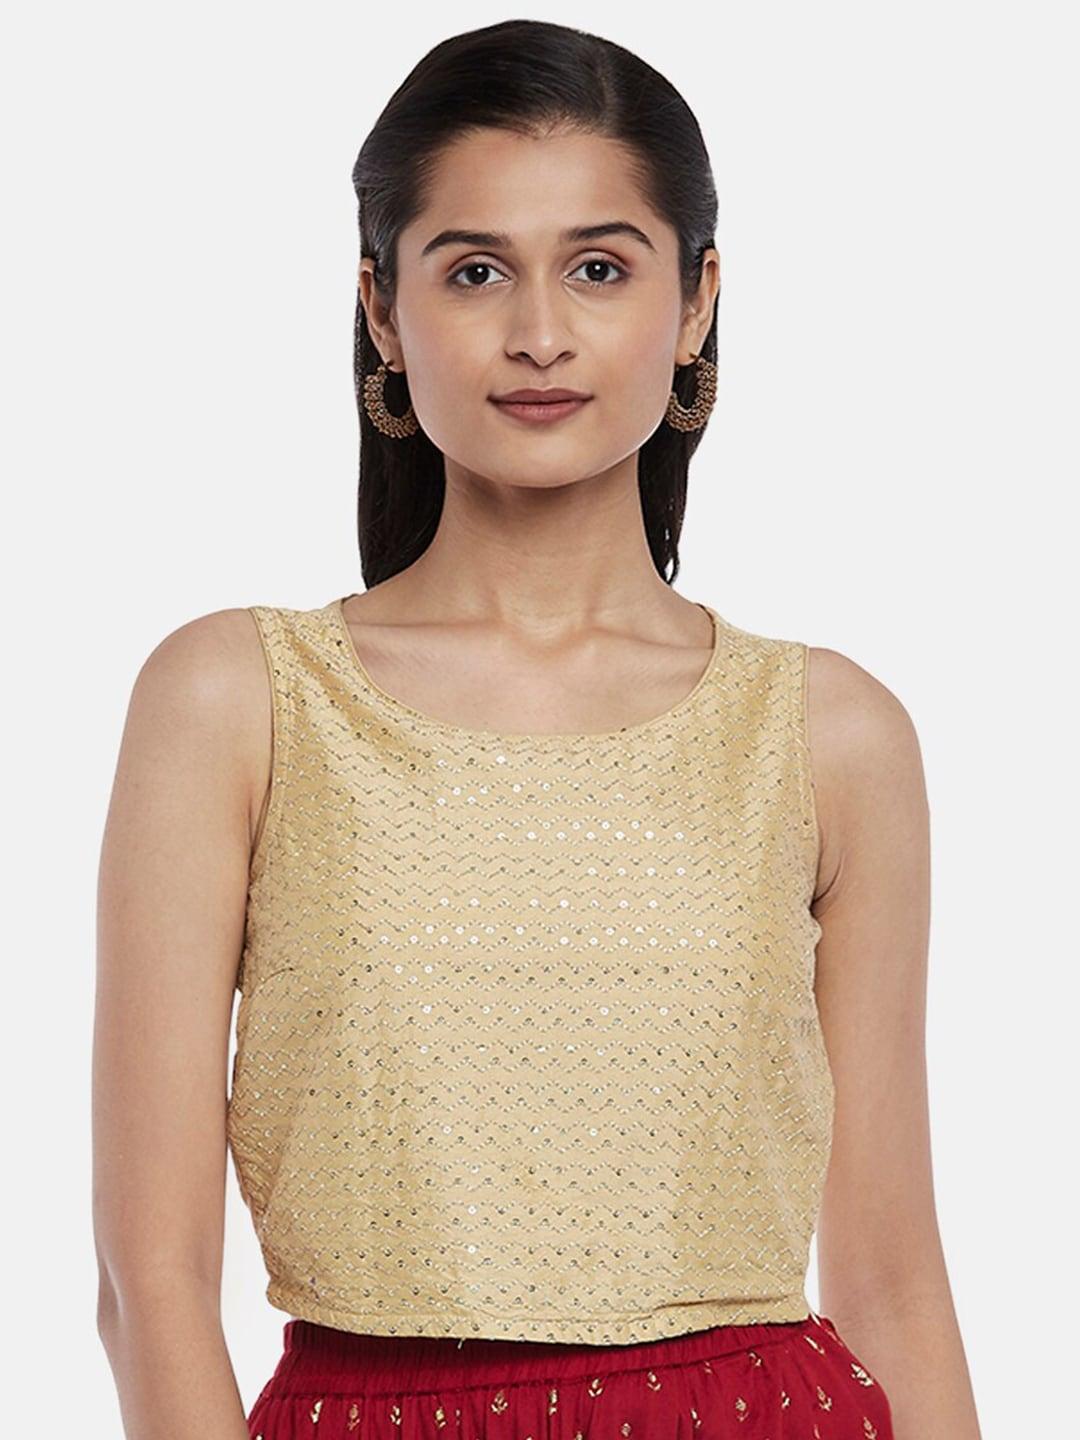 akkriti-by-pantaloons-gold-toned-embellished-top